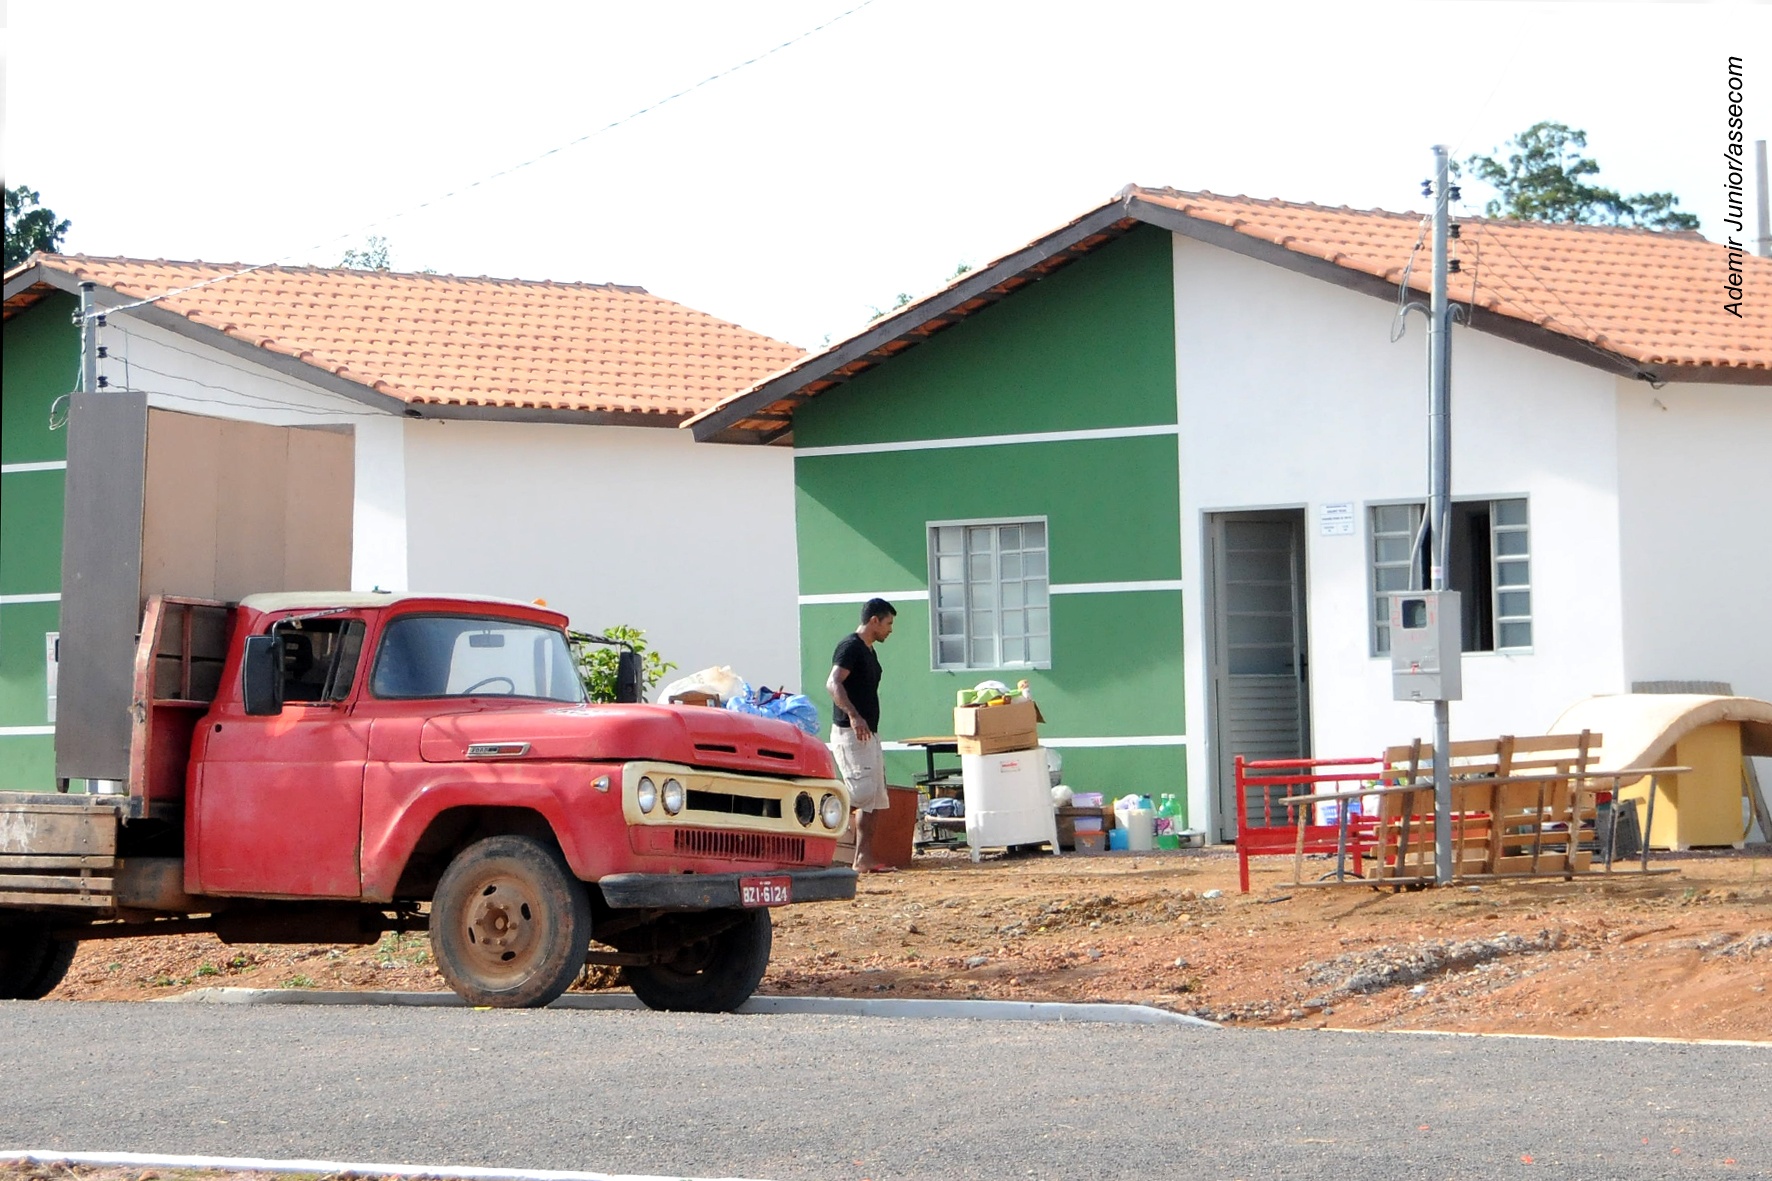 Casa do Construtor - SINOP / MT added a cover video., By Casa do Construtor  - SINOP / MT